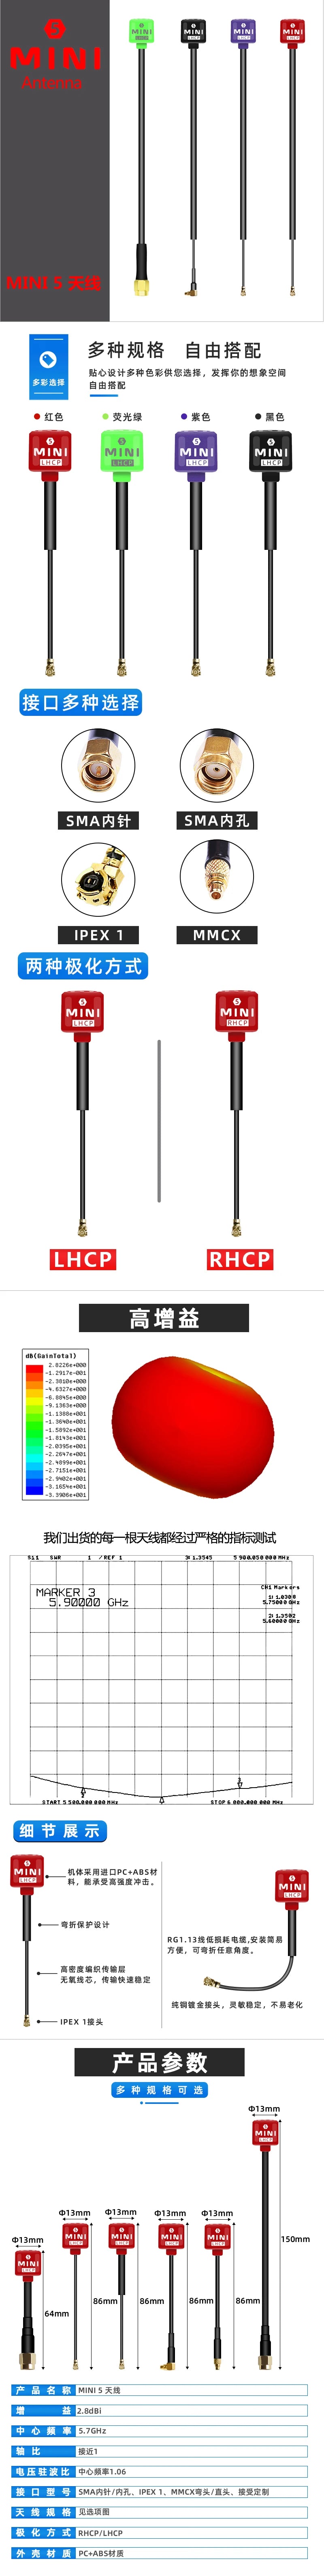 Light Weight 5.8G Lollipop 5 RHCP Antenna, swb94mmB sart 0mt1uz 9108